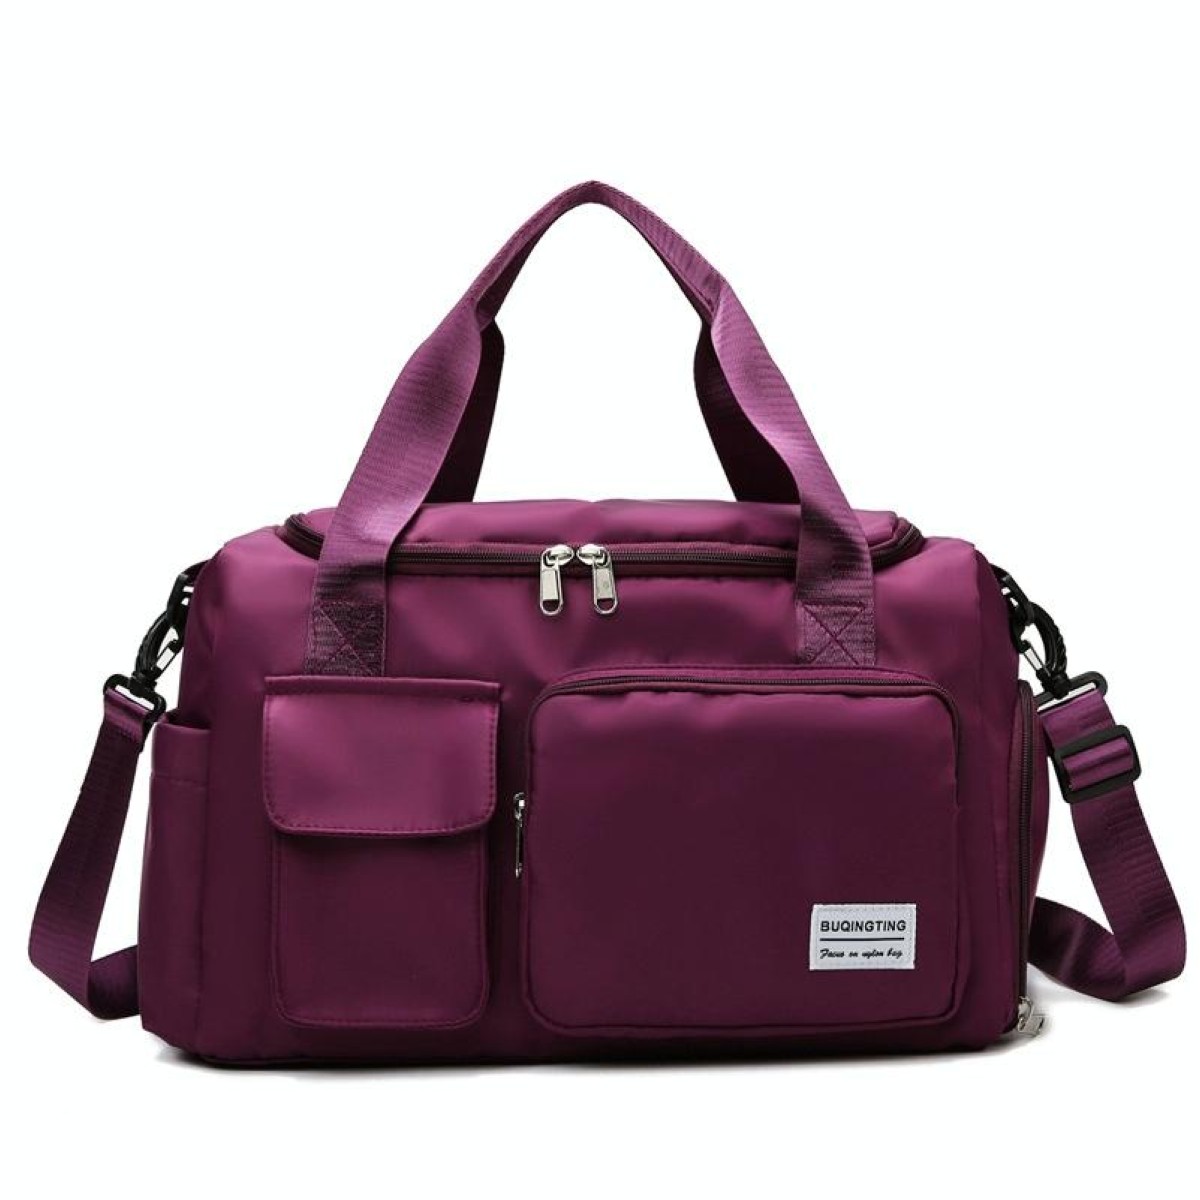 B-X336 Large Capacity Waterproof Travel Gym Bag Luggage Bag, Size: L(Purple Red)